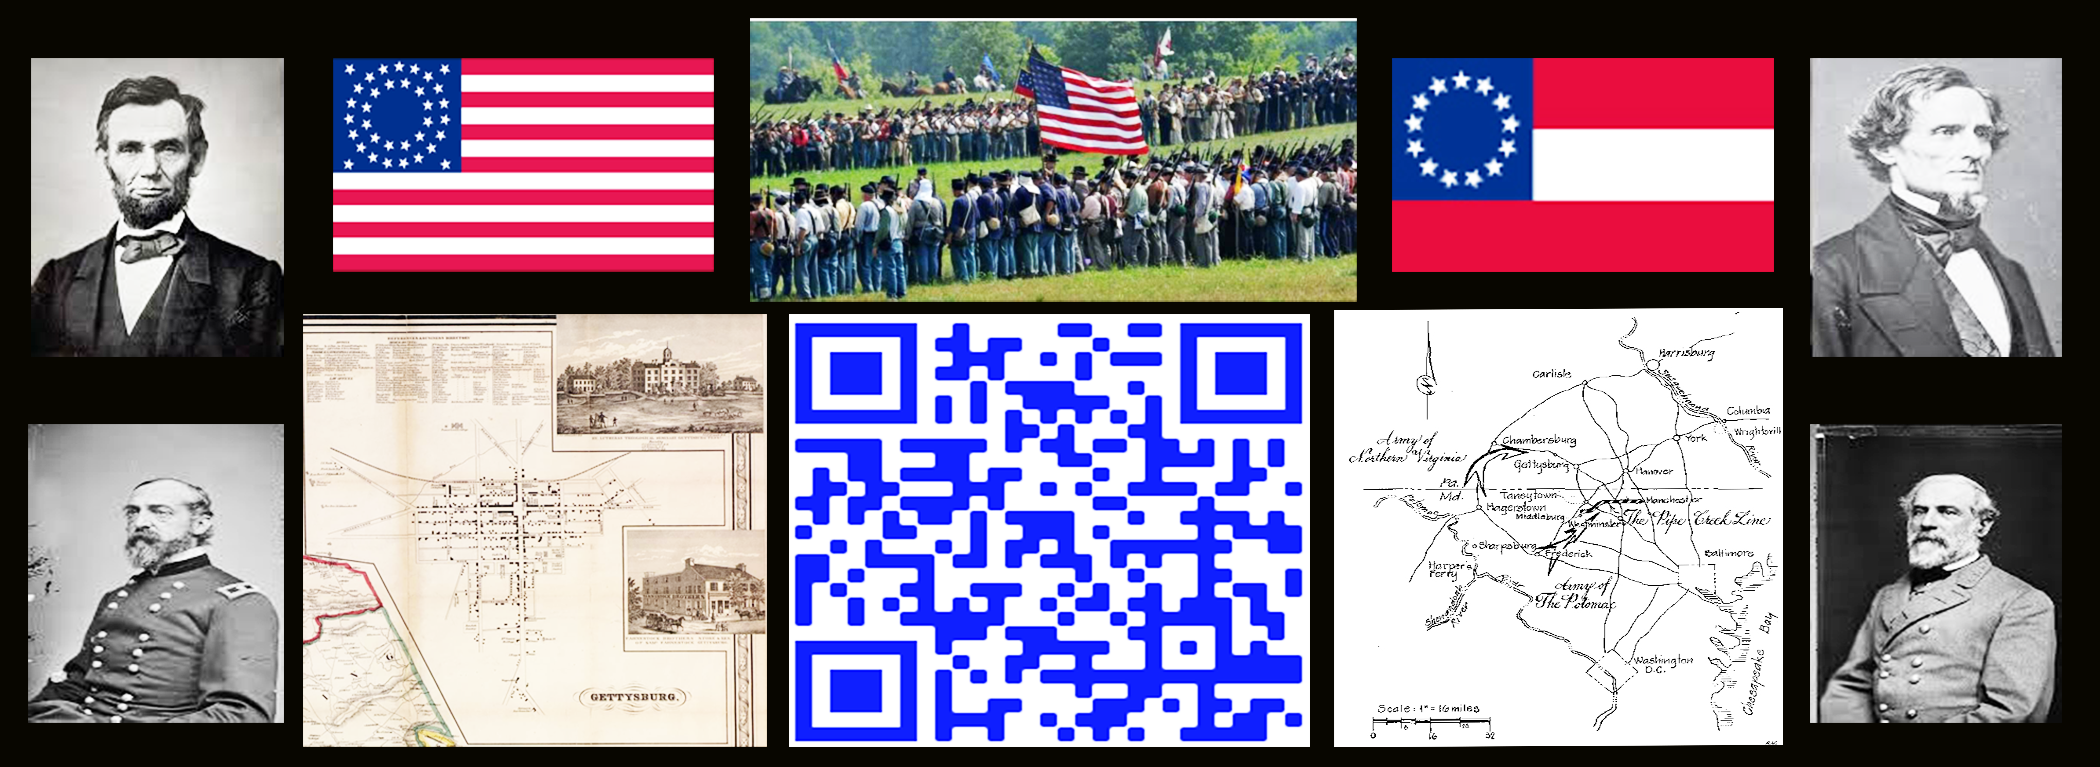 Gettysburgessays.org